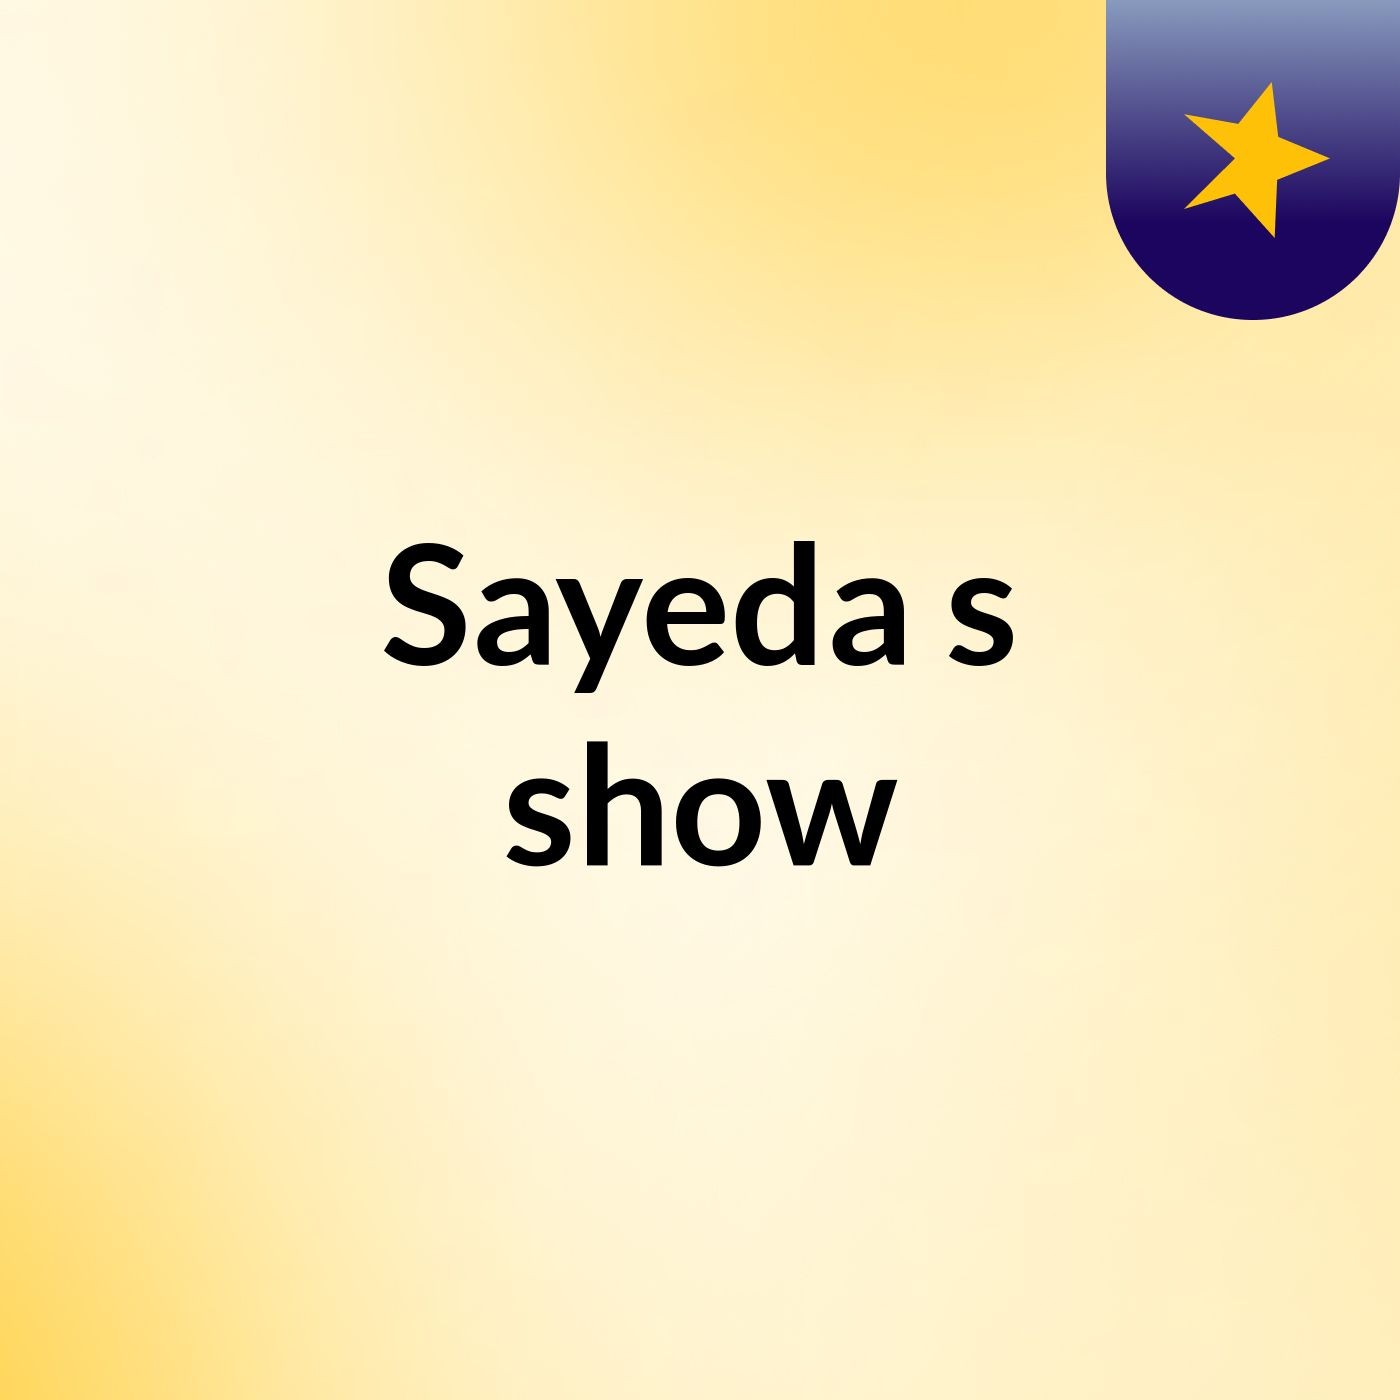 Sayeda's show